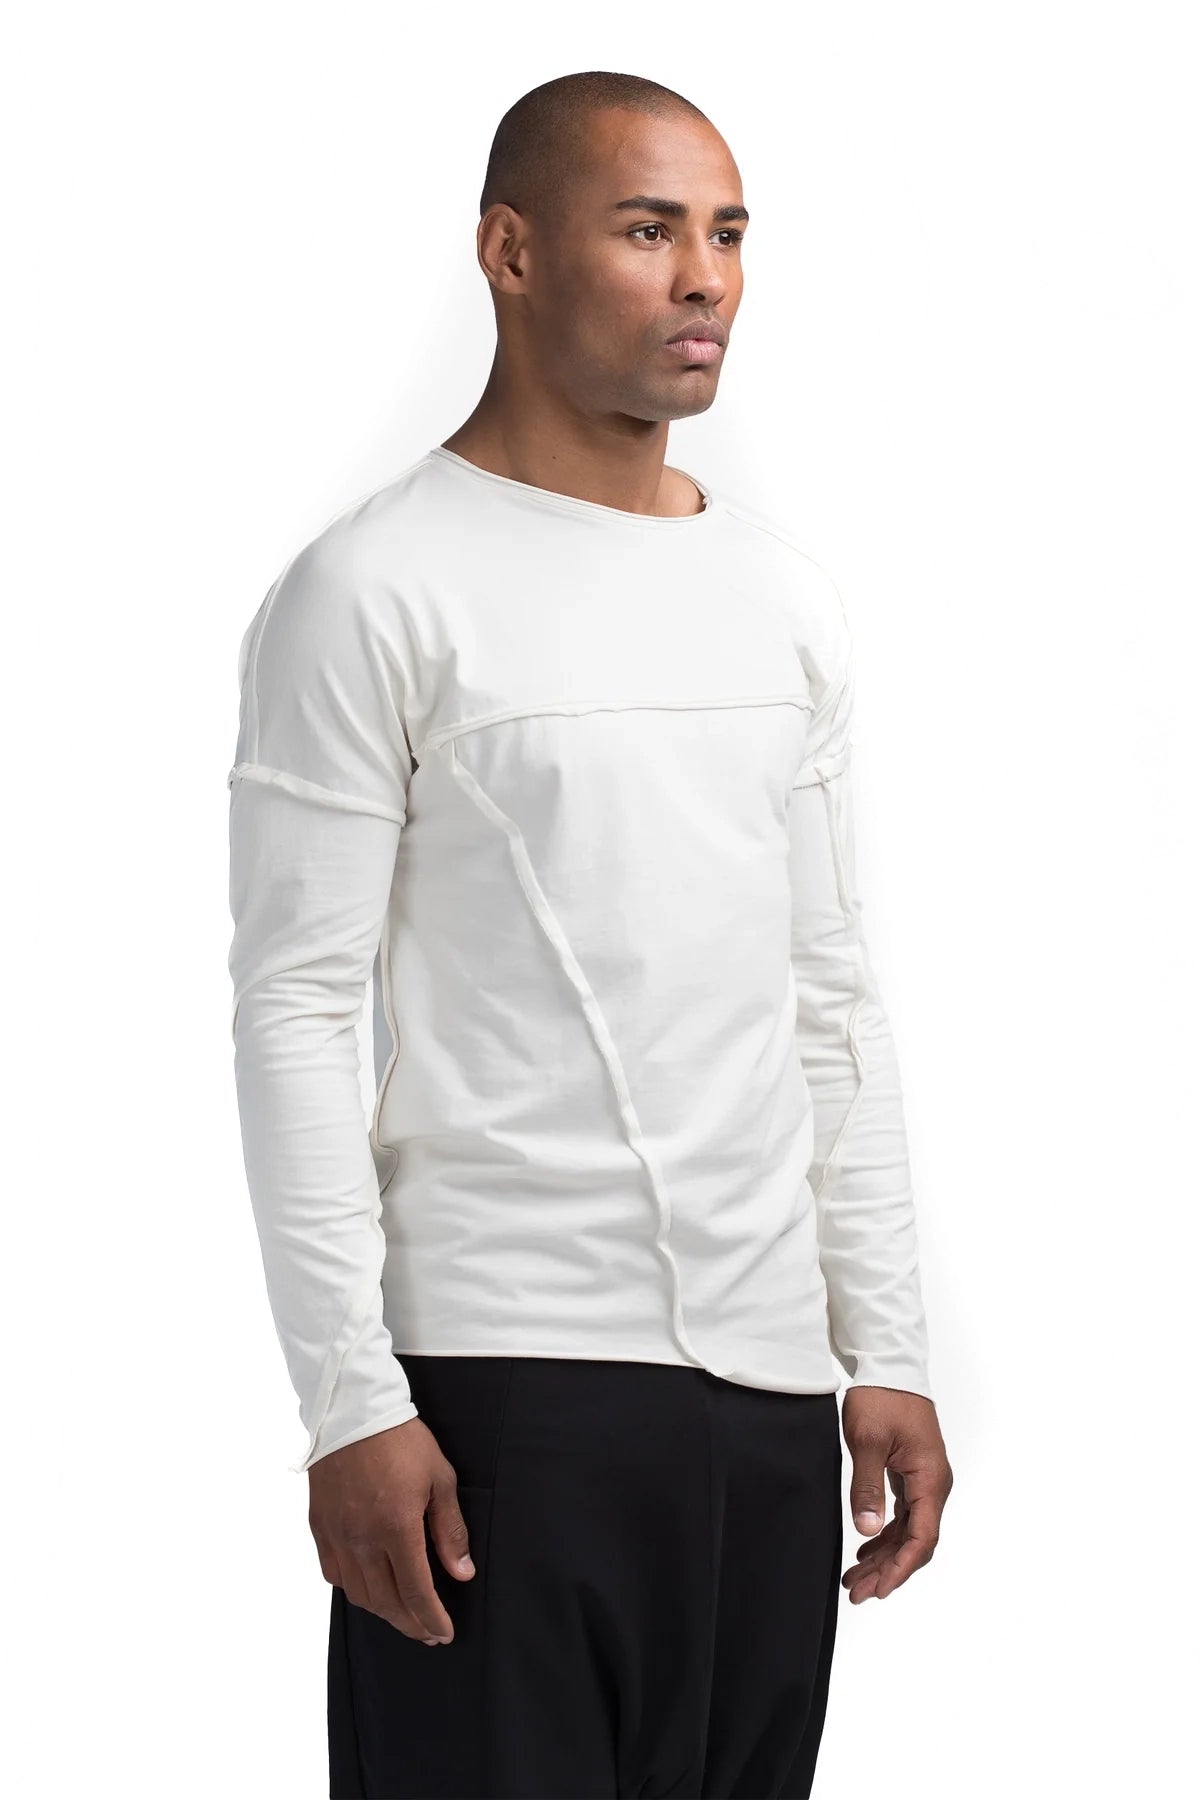 Bundle: 2x White Long Sleeve T-shirts